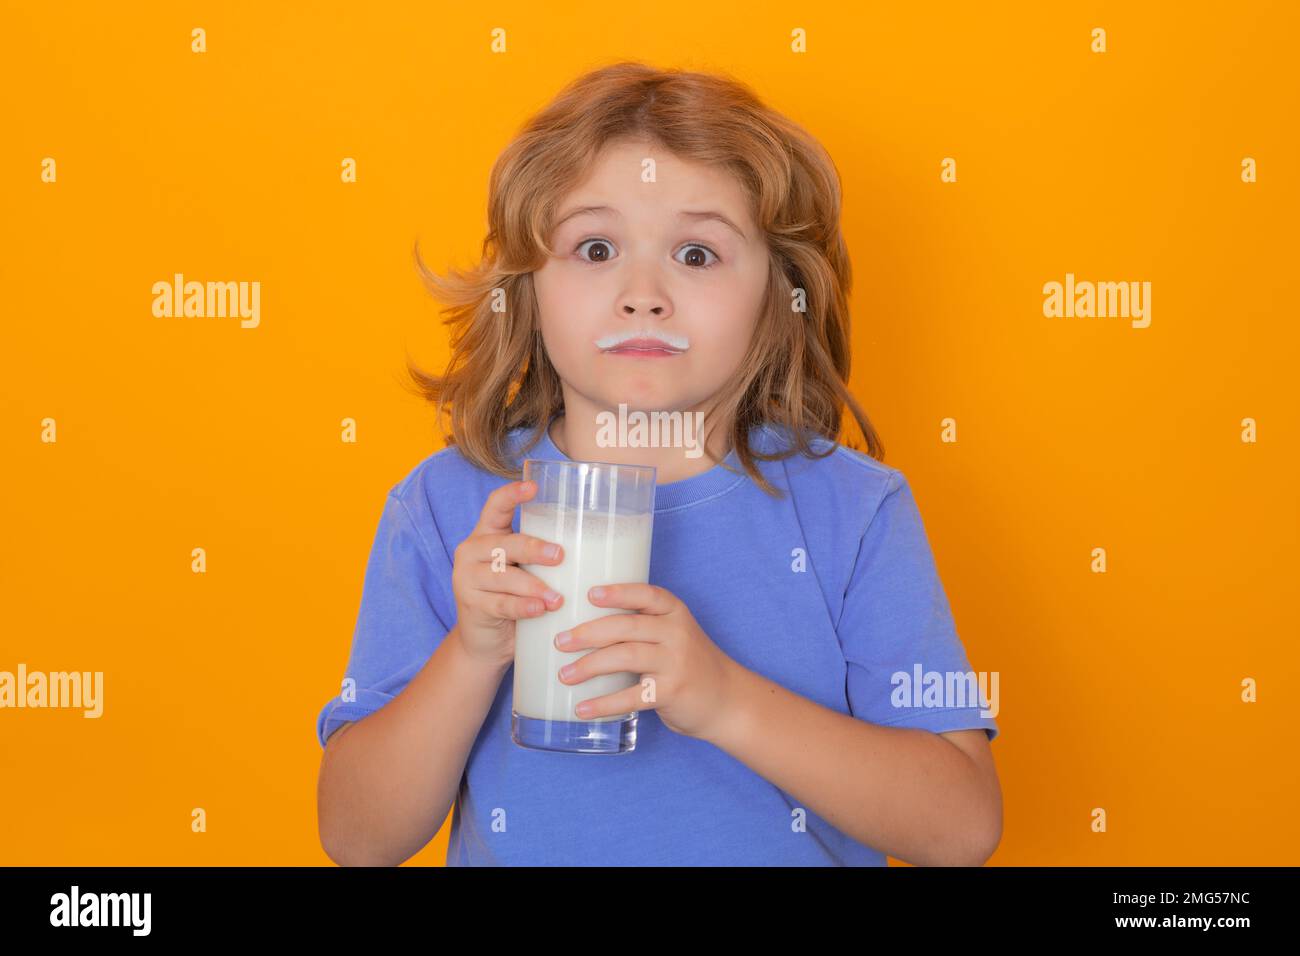 Dairy milk. Kid drinking milk isolated on yellow. Little boy child with milk mustache hold glass of milk. Stock Photo